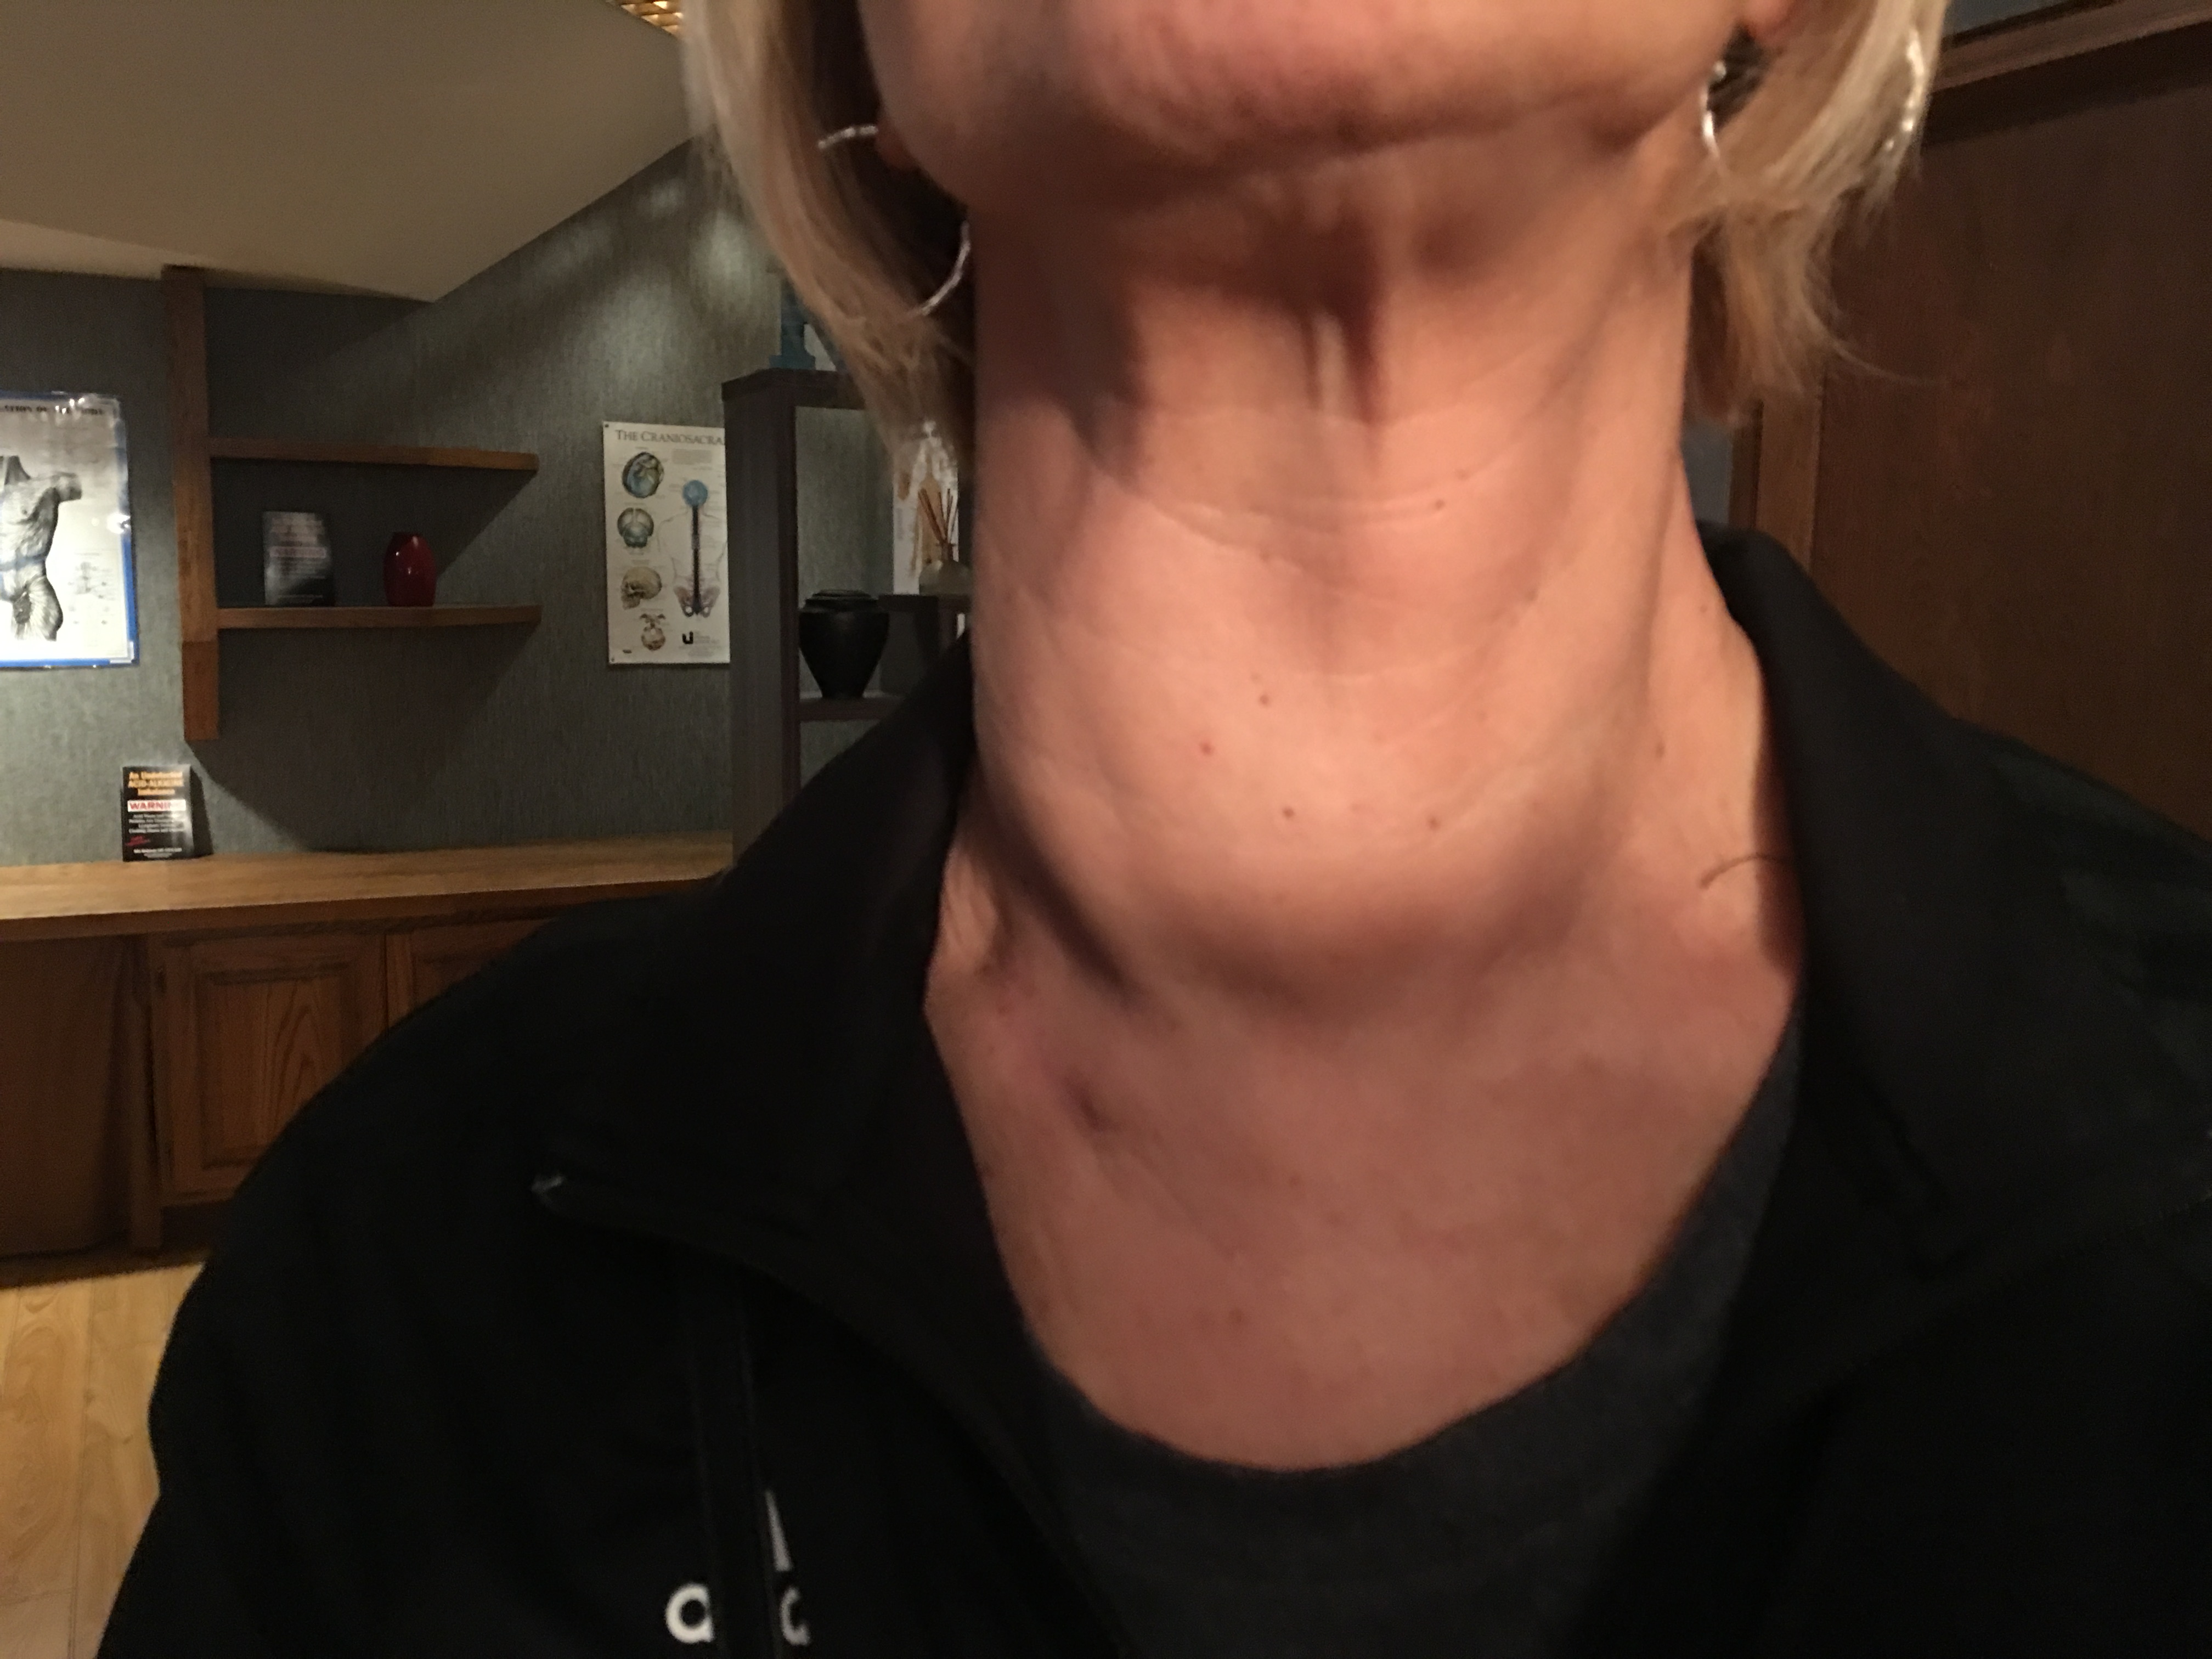 back of neck swollen lymph nodes